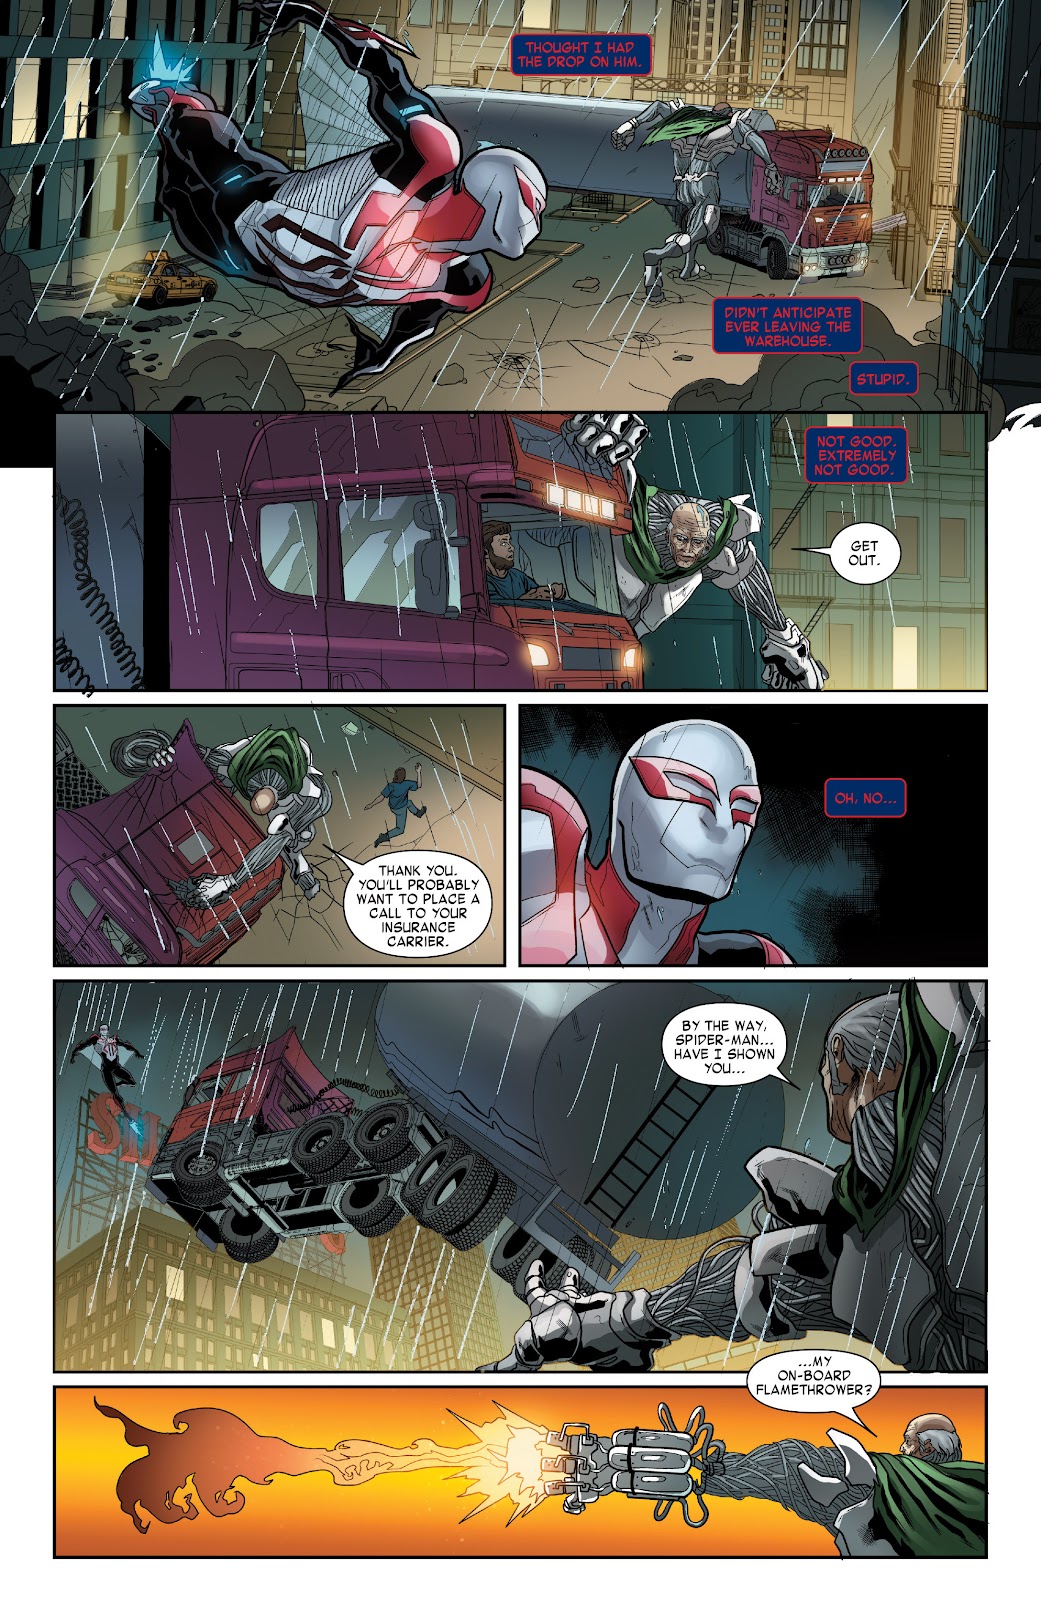 Spider-Man 2099 (2015) issue 3 - Page 13